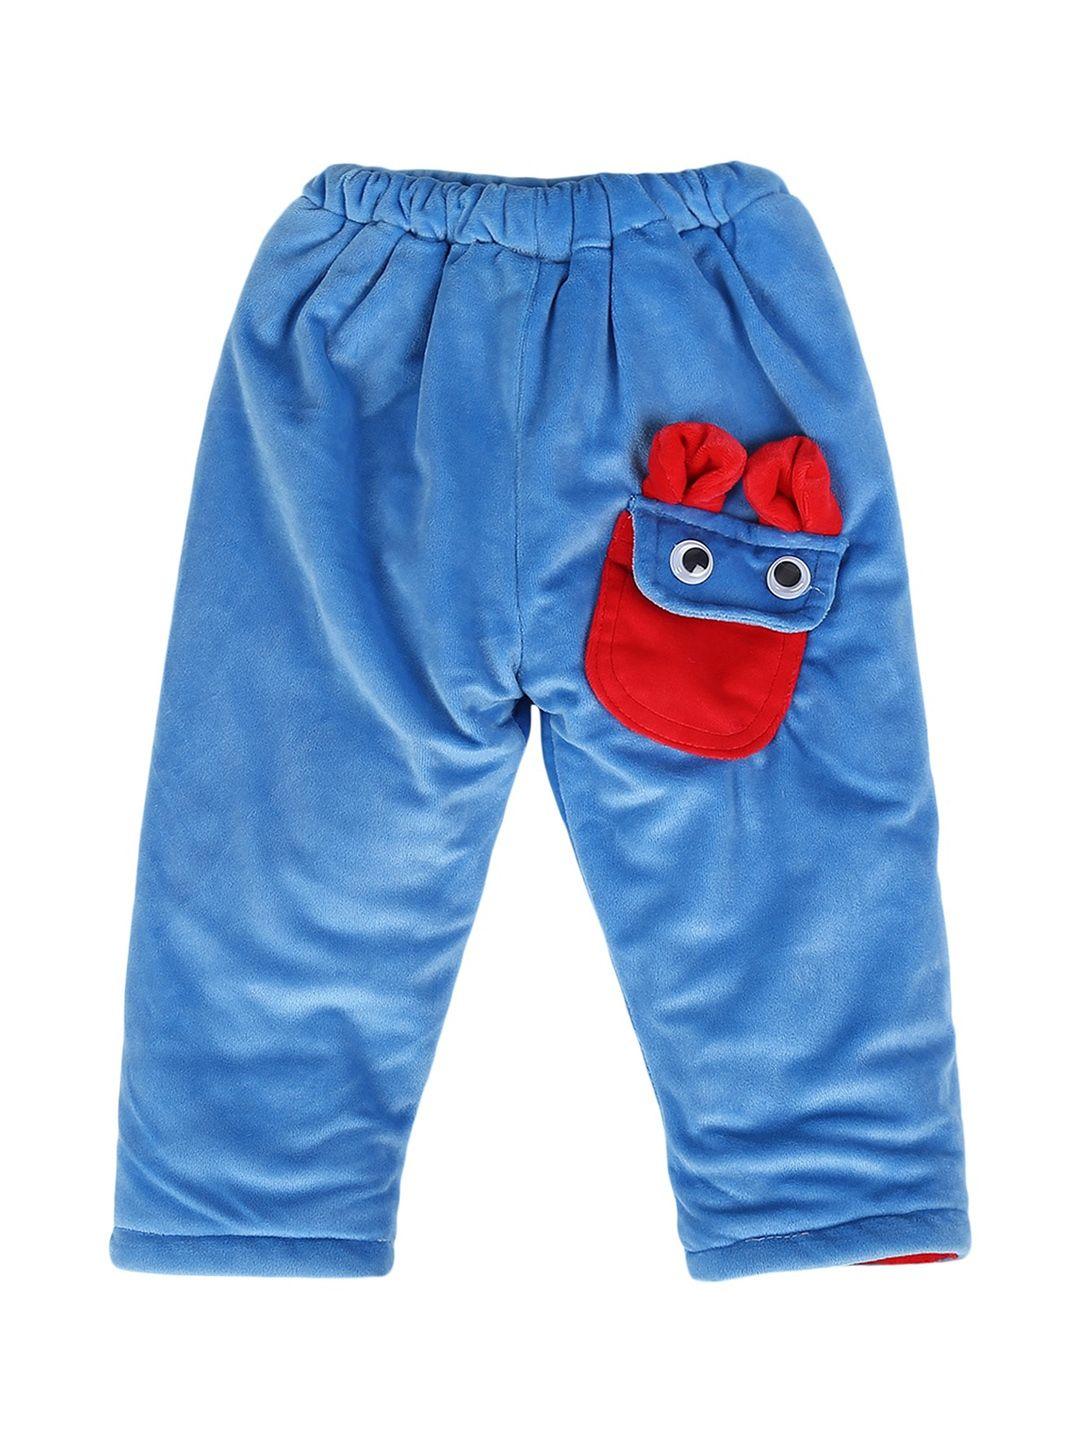 v-mart infant mid-rise cotton trousers